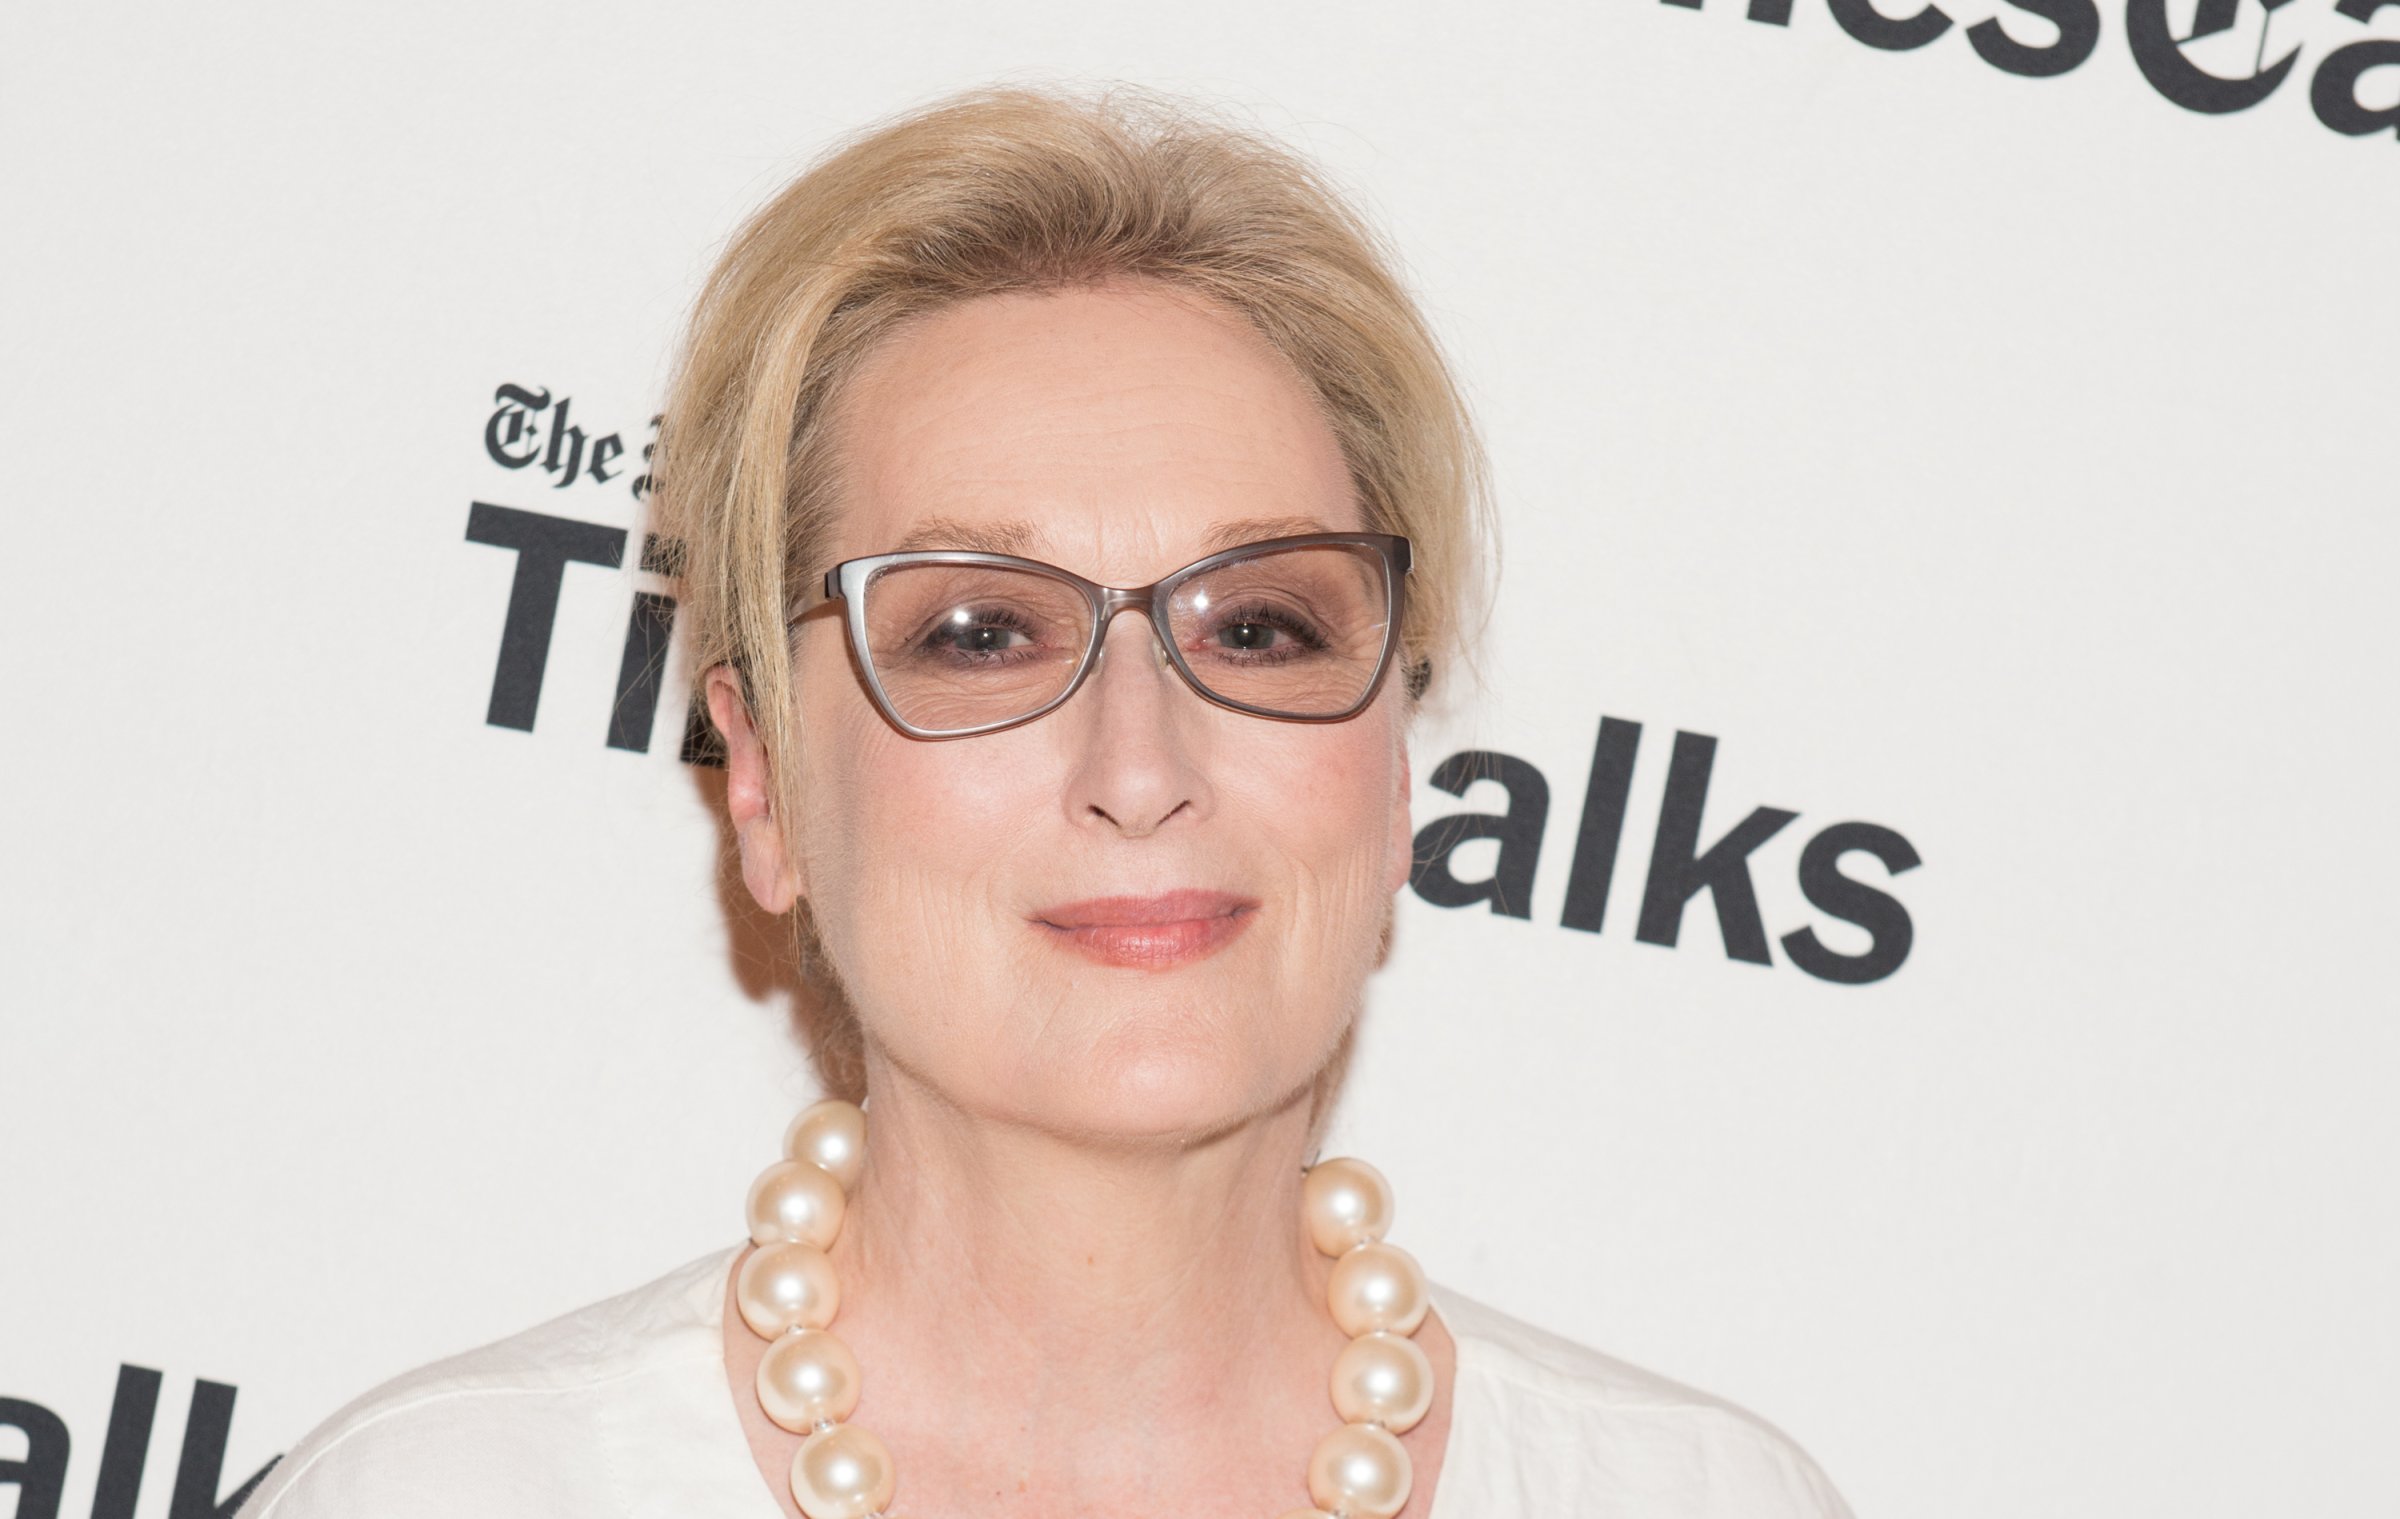 TimesTalks Presents Meryl Streep, "Florence Foster Jenkins"